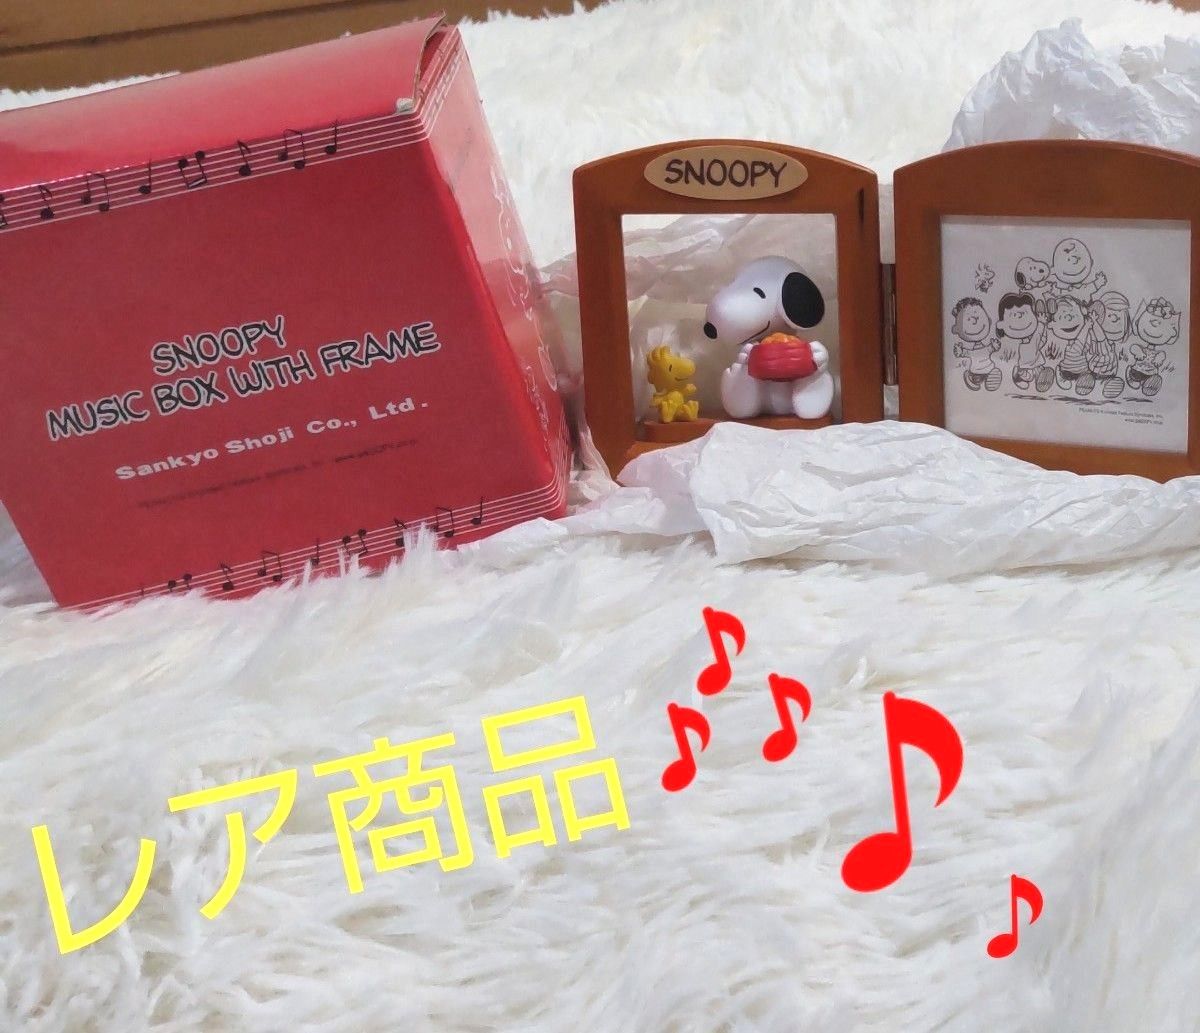 Sankyo Shoji／スヌーピー オルゴール＆フォトフレーム  陶器